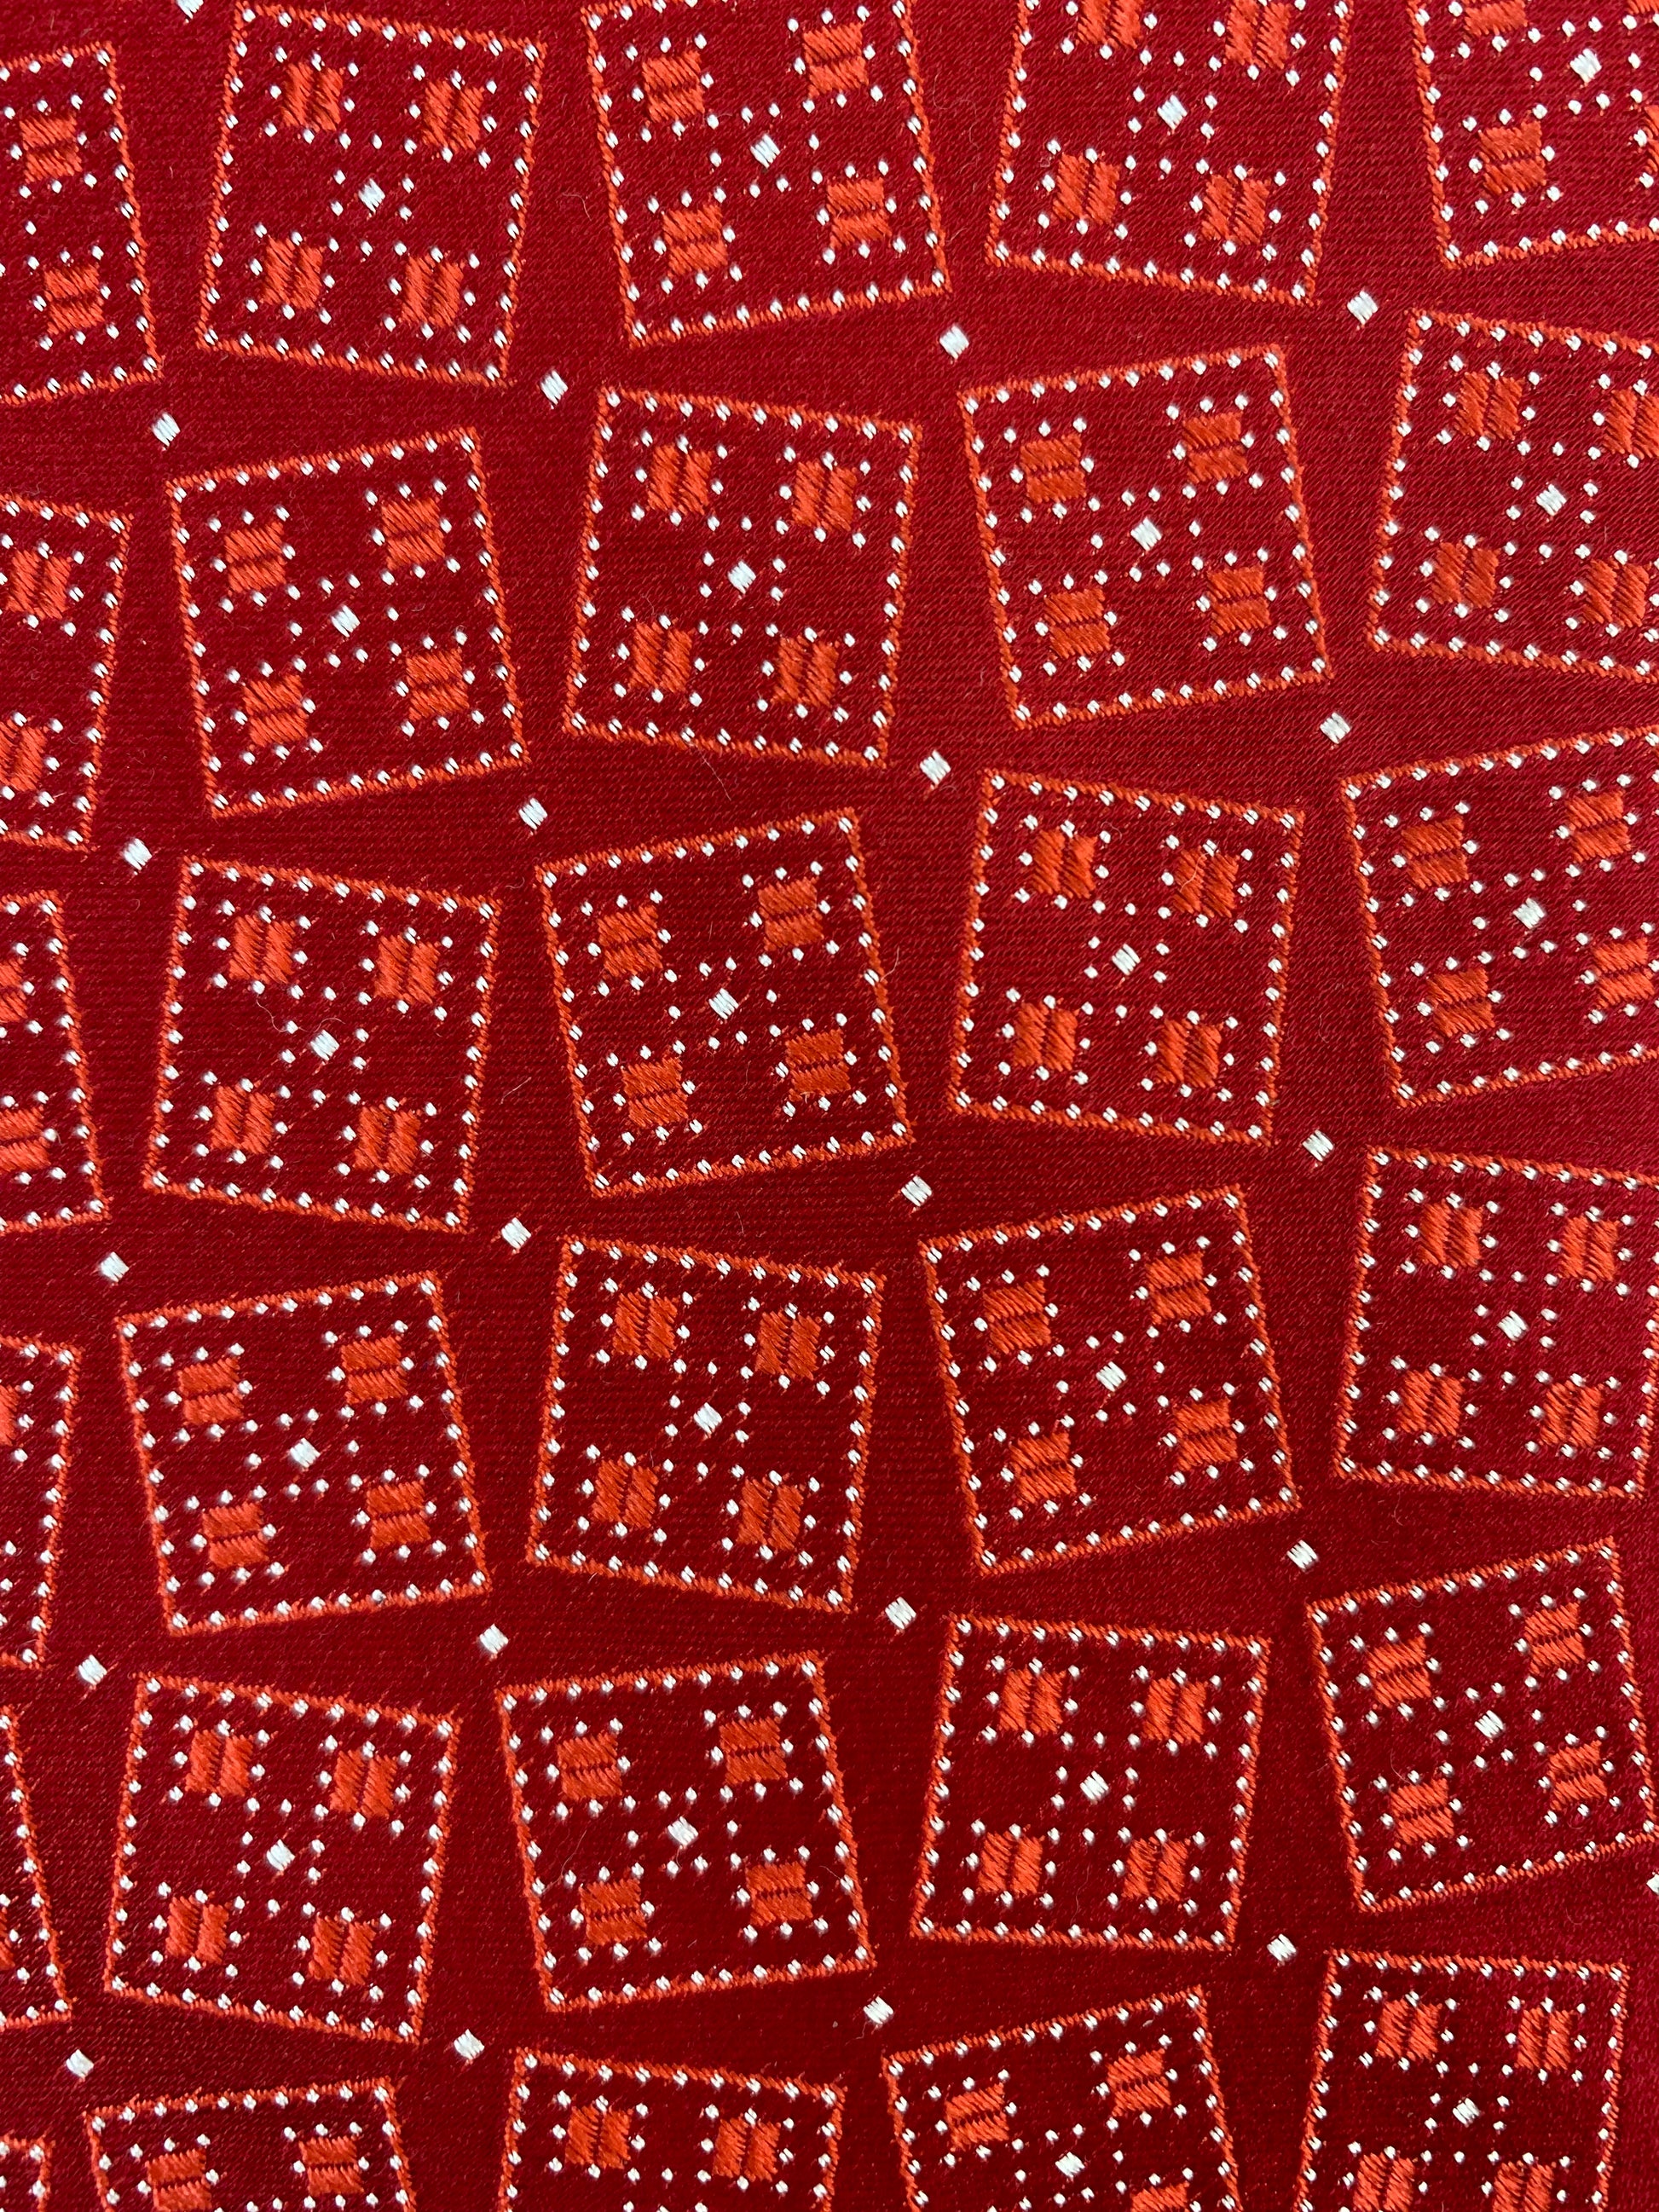 90s Deadstock Silk Necktie, Men's Vintage Red Geometric Pattern Tie, NOS